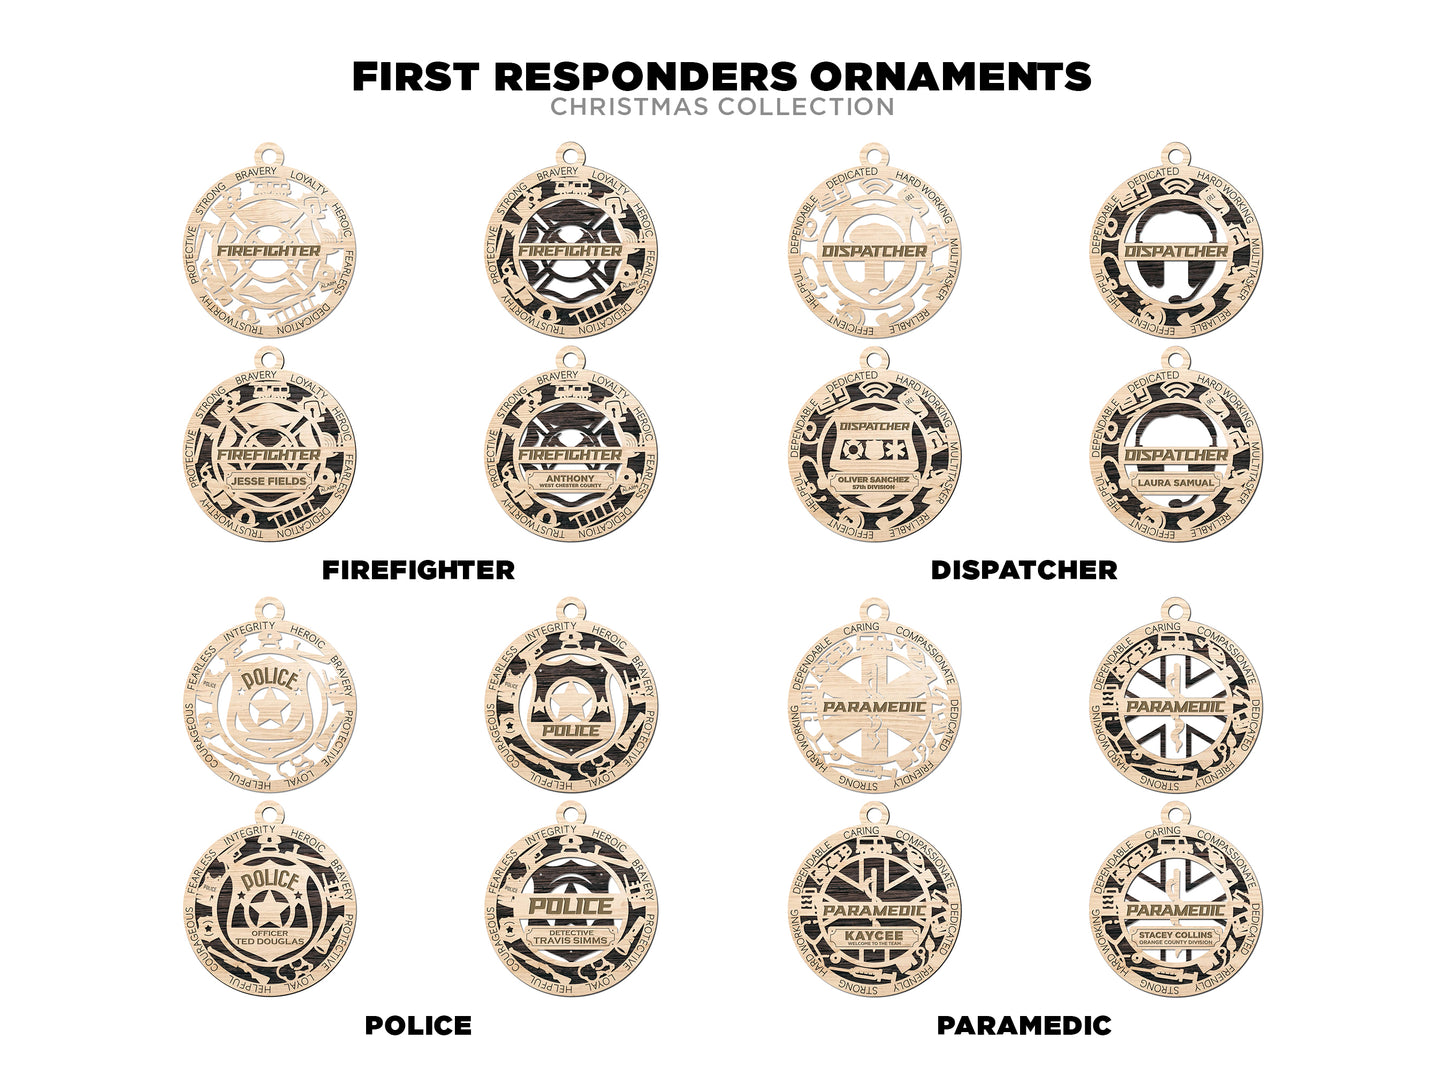 Police, Fire Fighter, First Responder, Paramedic, Border Patrol, Sheriff, EMT, Deputy